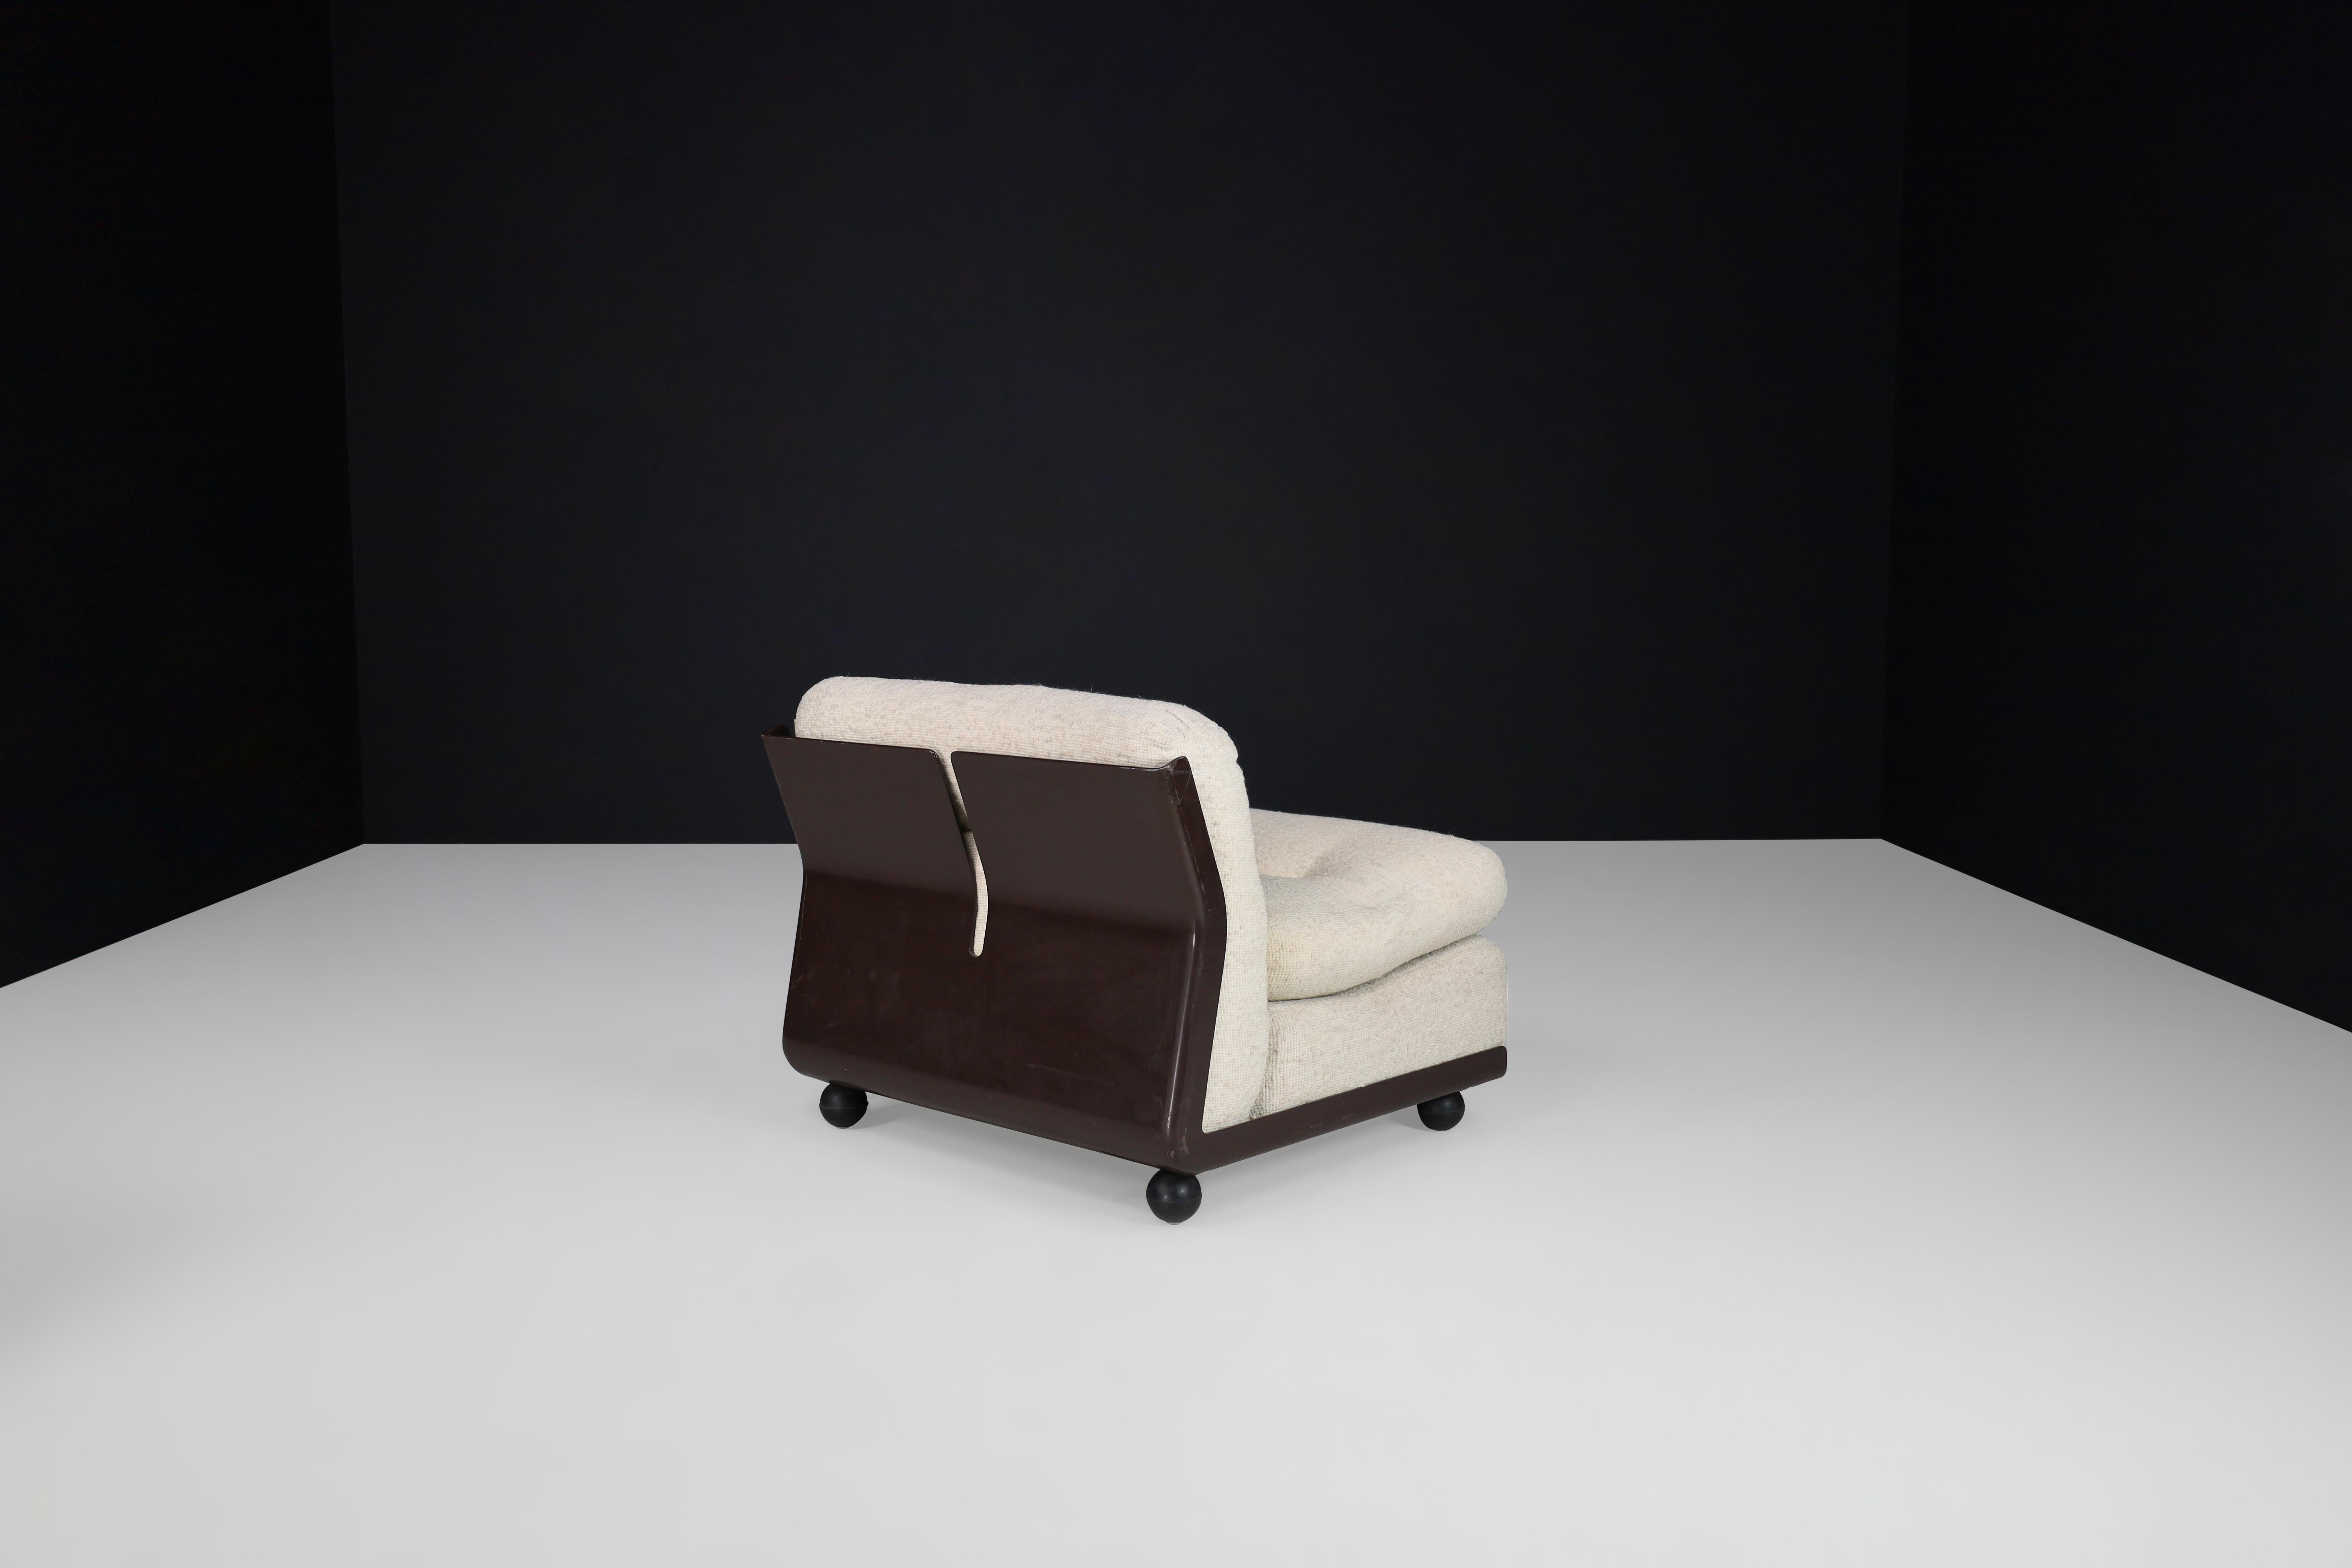 Mario Bellini Amanta B&B Italia Modular Sofa Four Seats in Fabric Italy 1970 For Sale 3